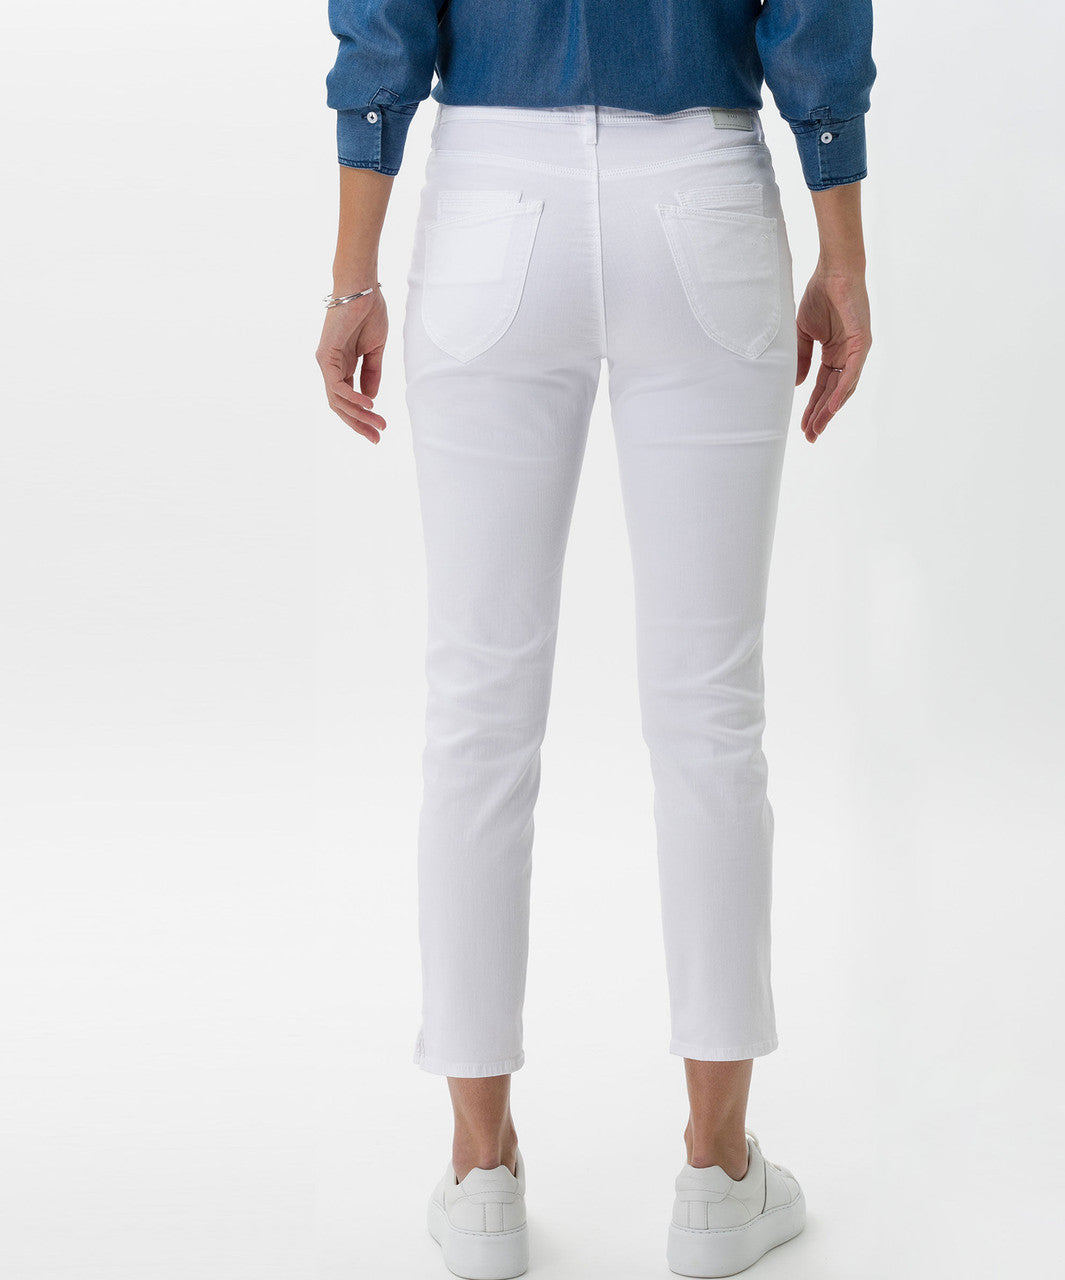 Brax Mary White 7/8 Jeans